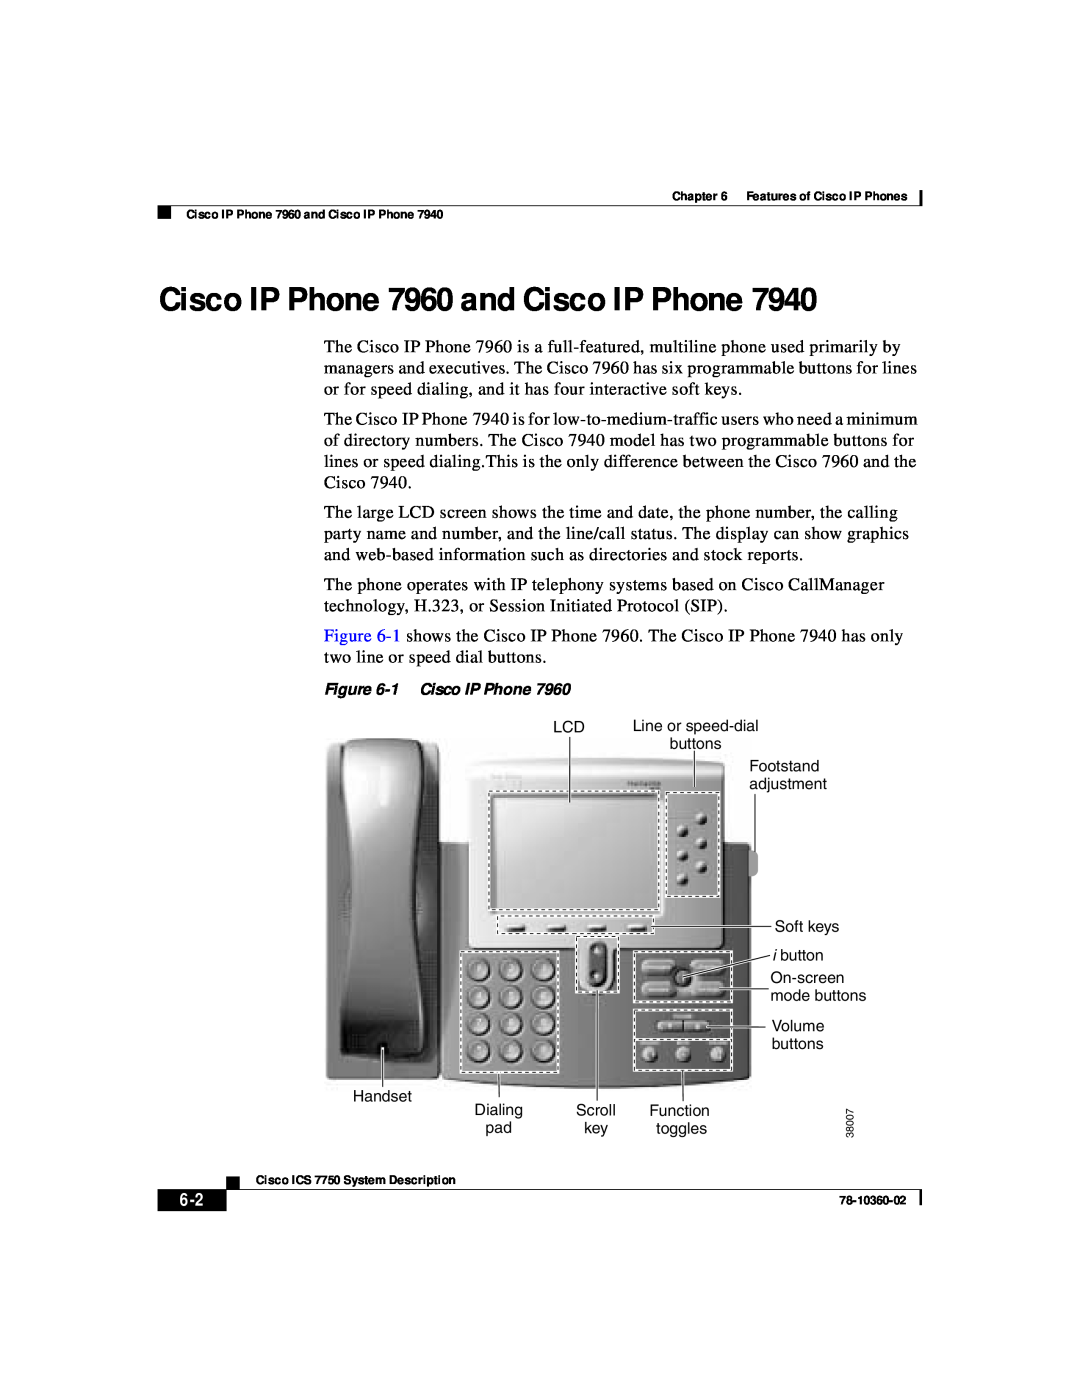 Cisco Systems ICS-7750 manual Cisco IP Phone 7960 and Cisco IP Phone, 1 Cisco IP Phone 